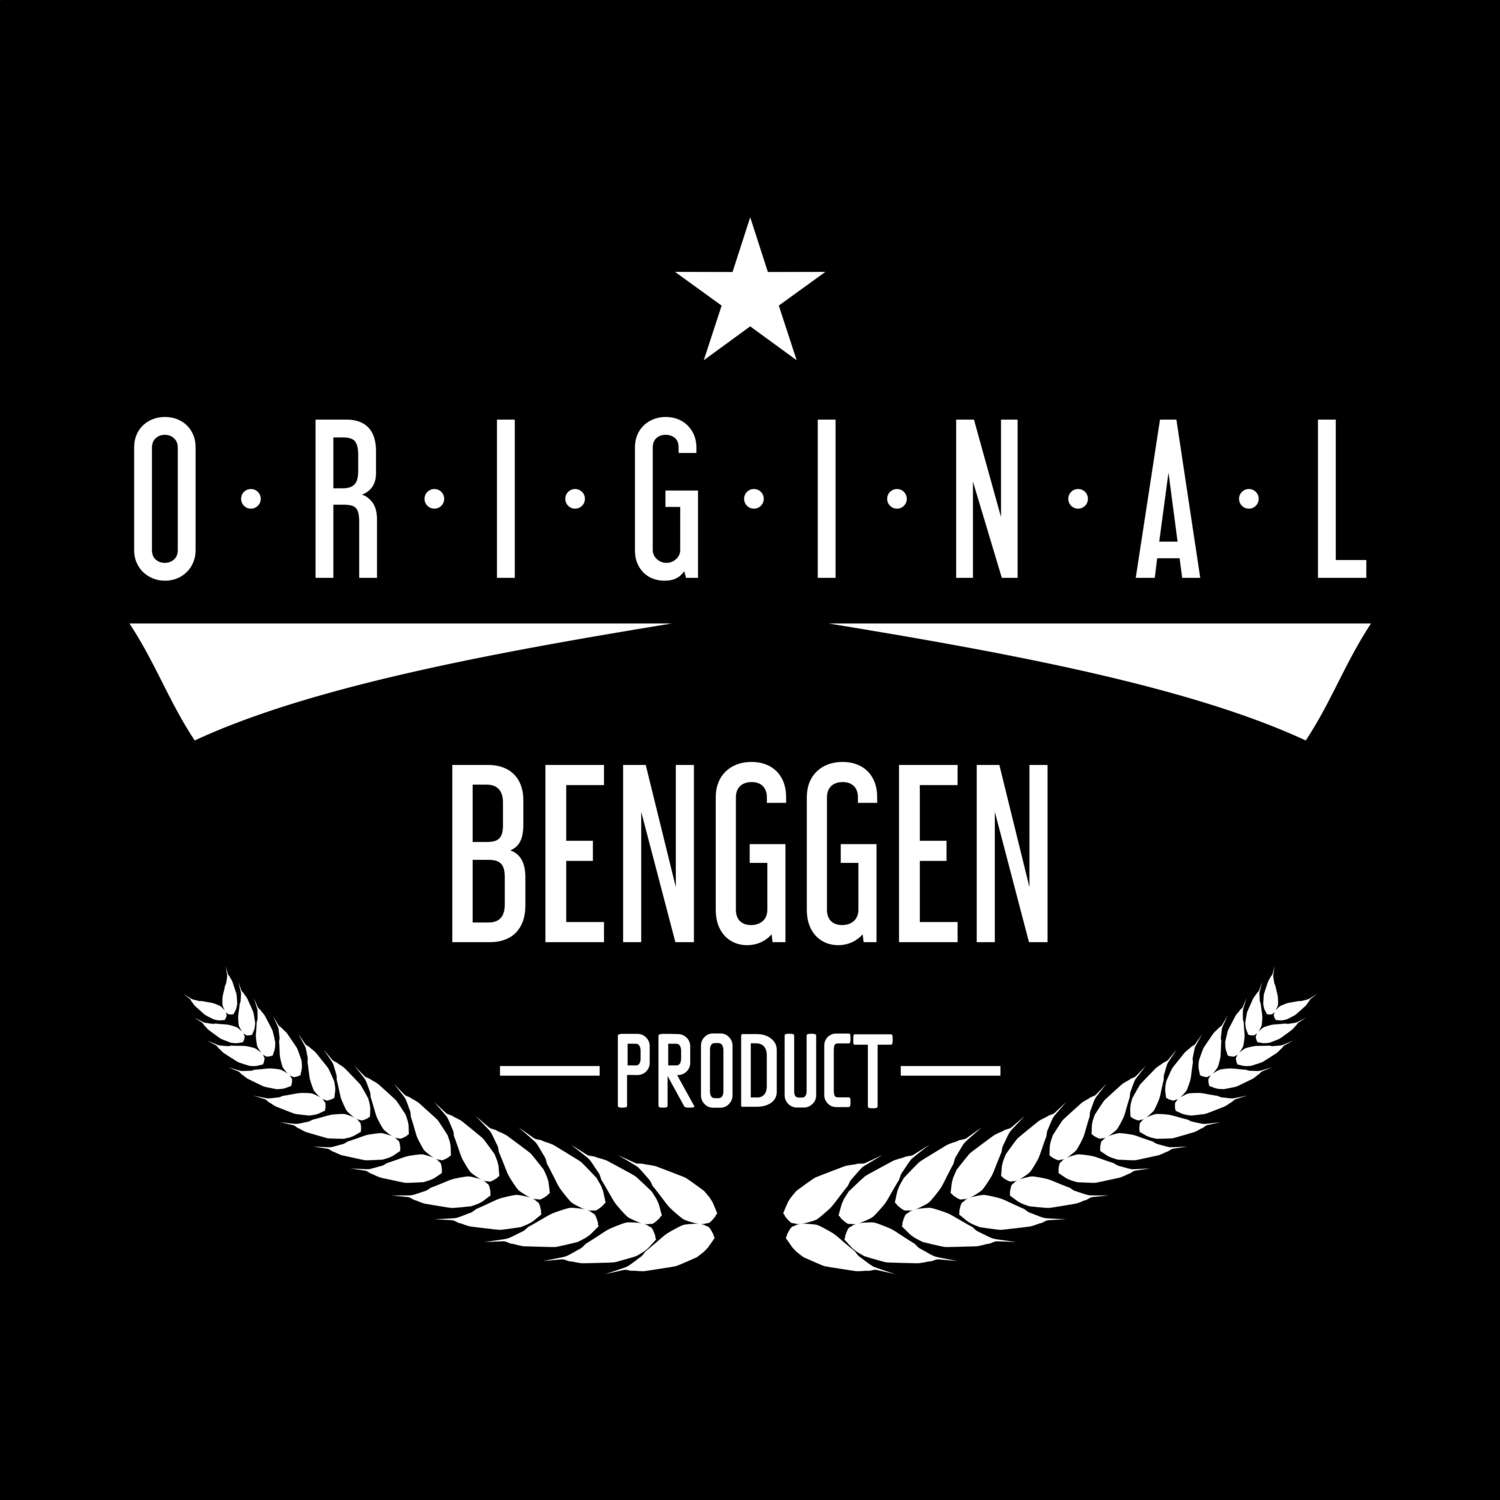 Benggen T-Shirt »Original Product«